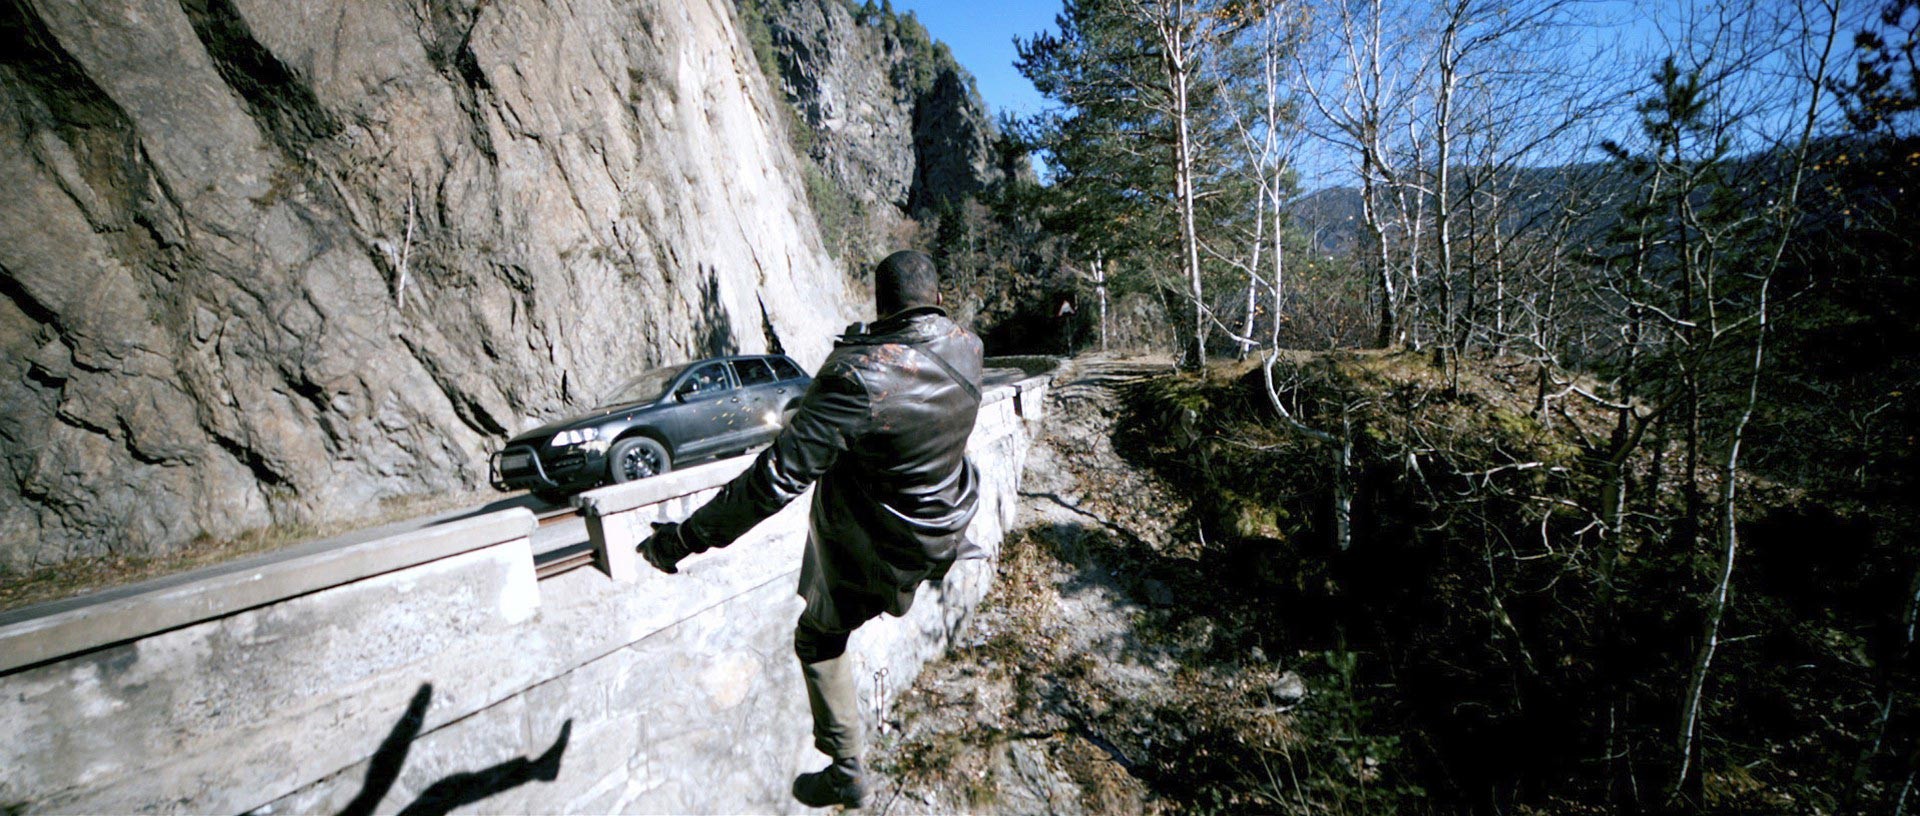 Idris Elba stars as Moreau in Columbia Pictures' Ghost Rider: Spirit of Vengeance (2012)